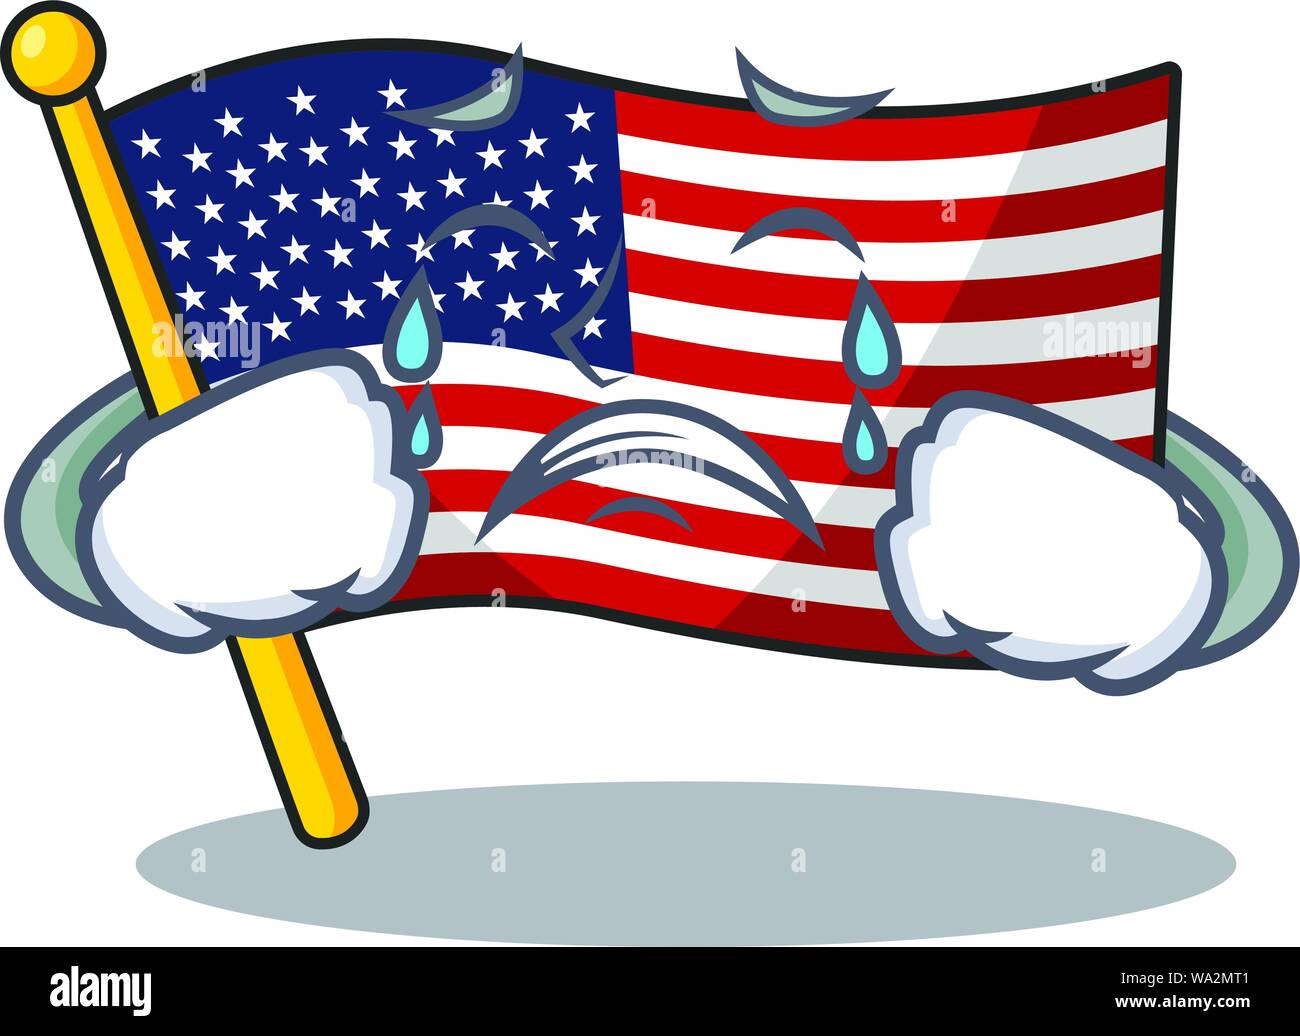 crying-america-flag-stored-in-cartoon-cupboard-WA2MT1.jpg